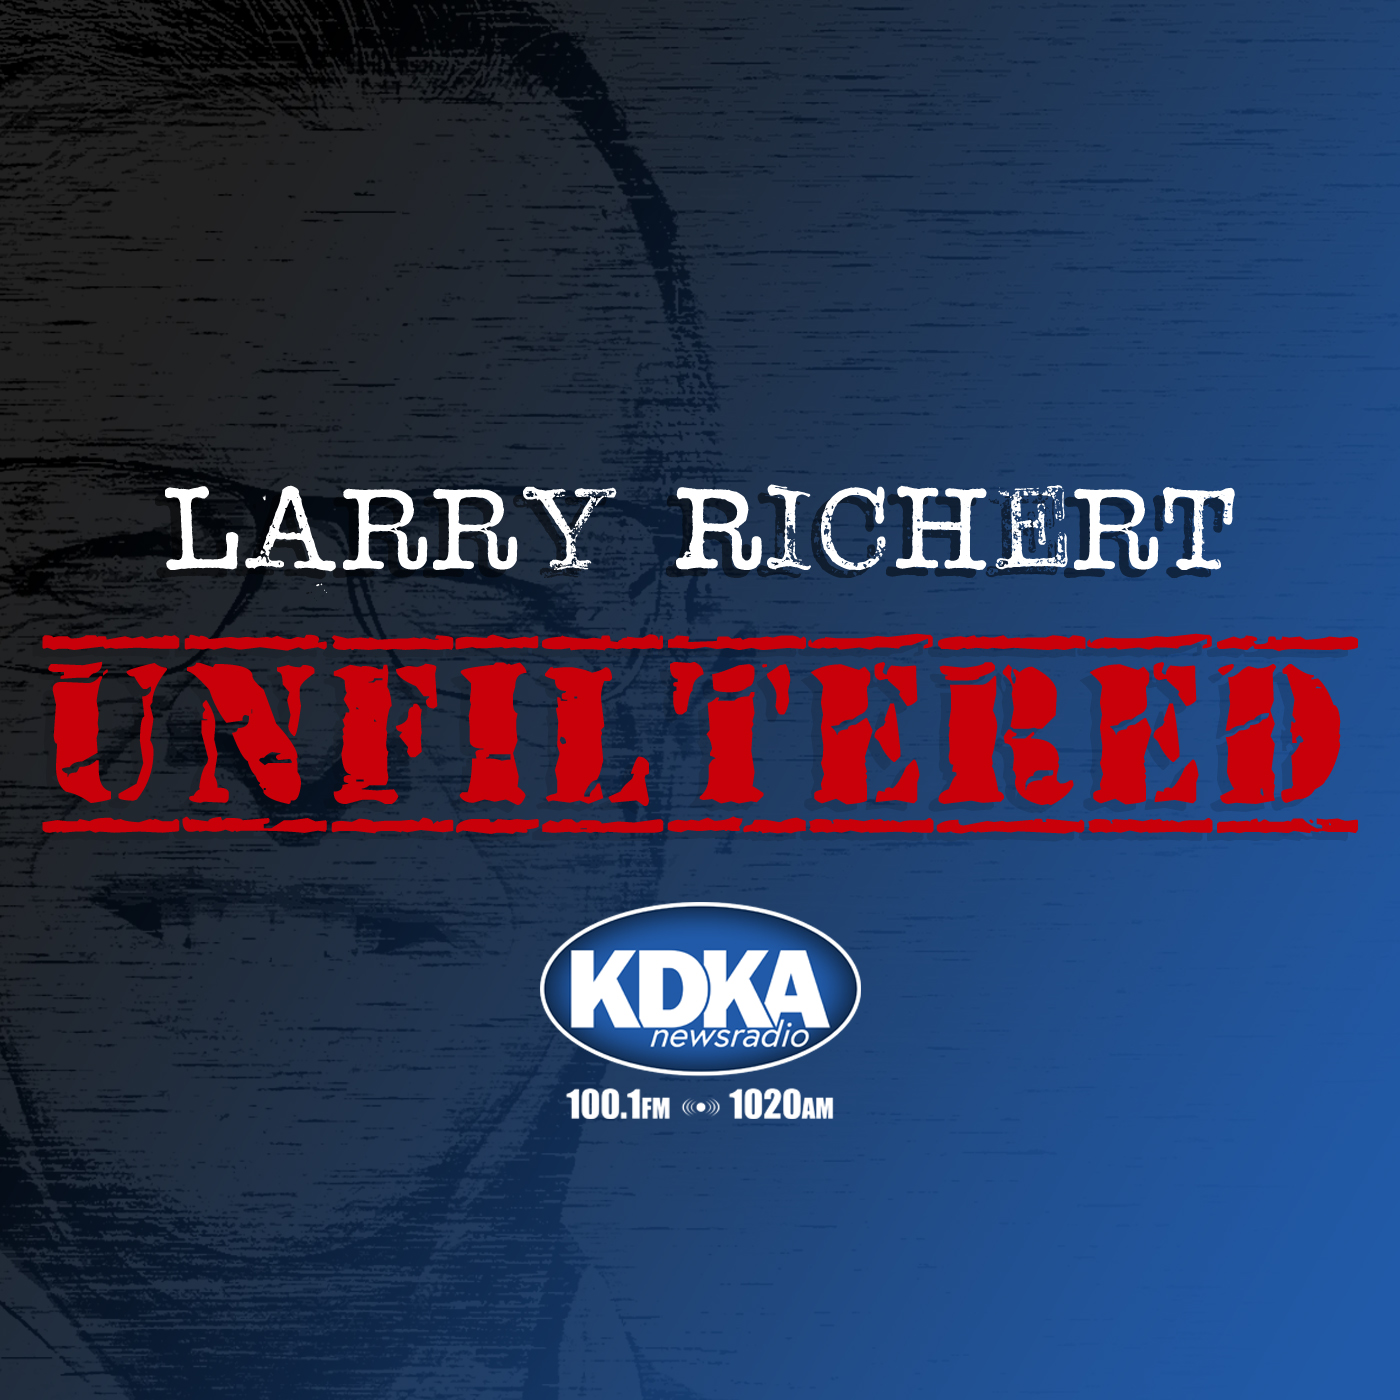 Podcast Episode #48 Larry Richert: Unfiltered